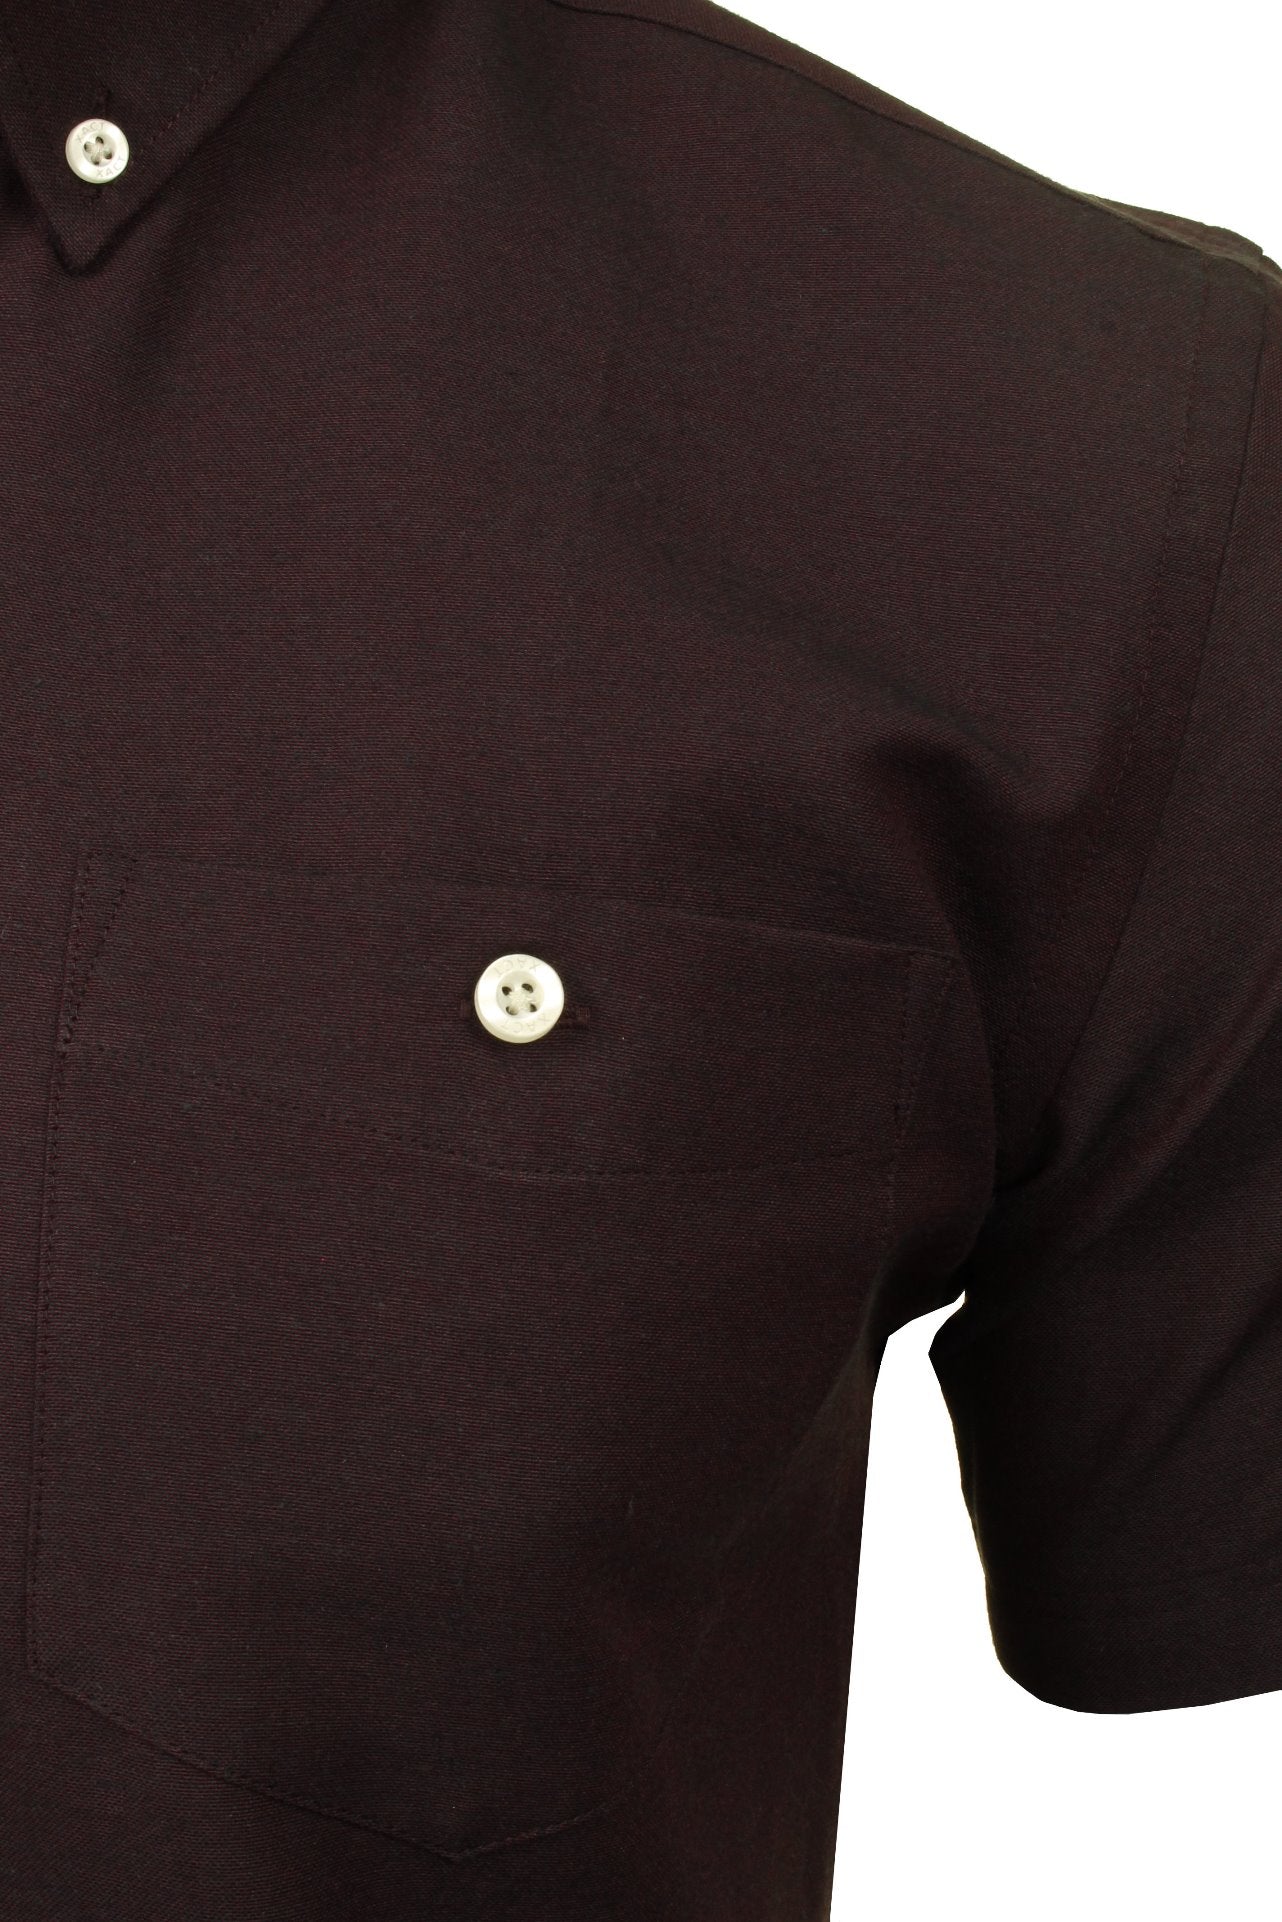 Xact Mens Button Down Oxford Shirt - Short Sleeved-2